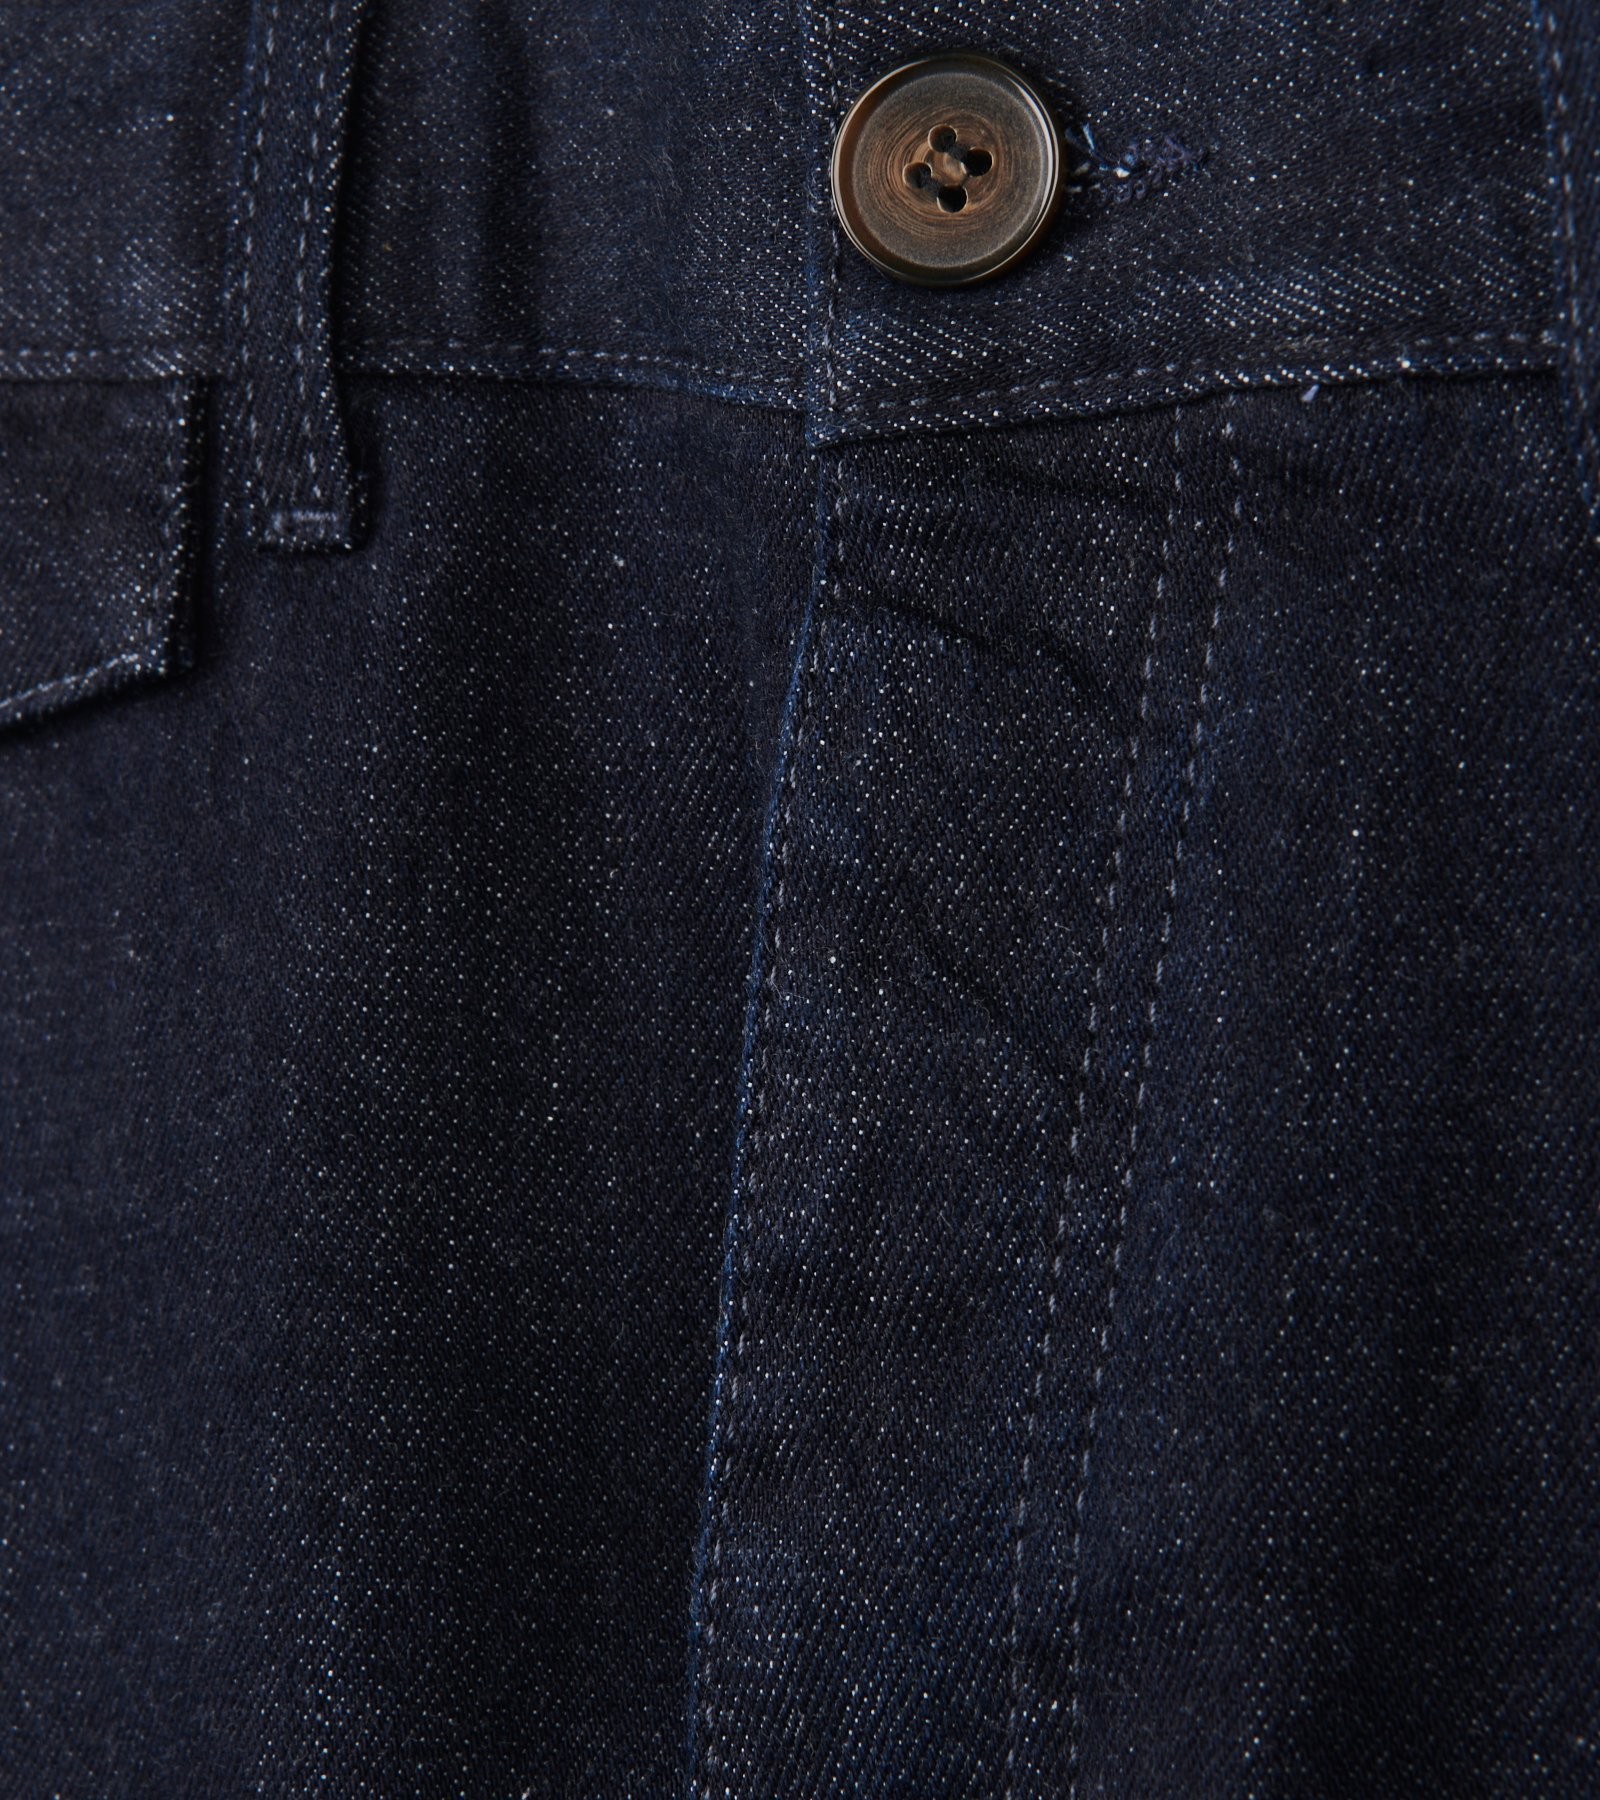 CKS hommes - CHOP - jeans longs - bleu